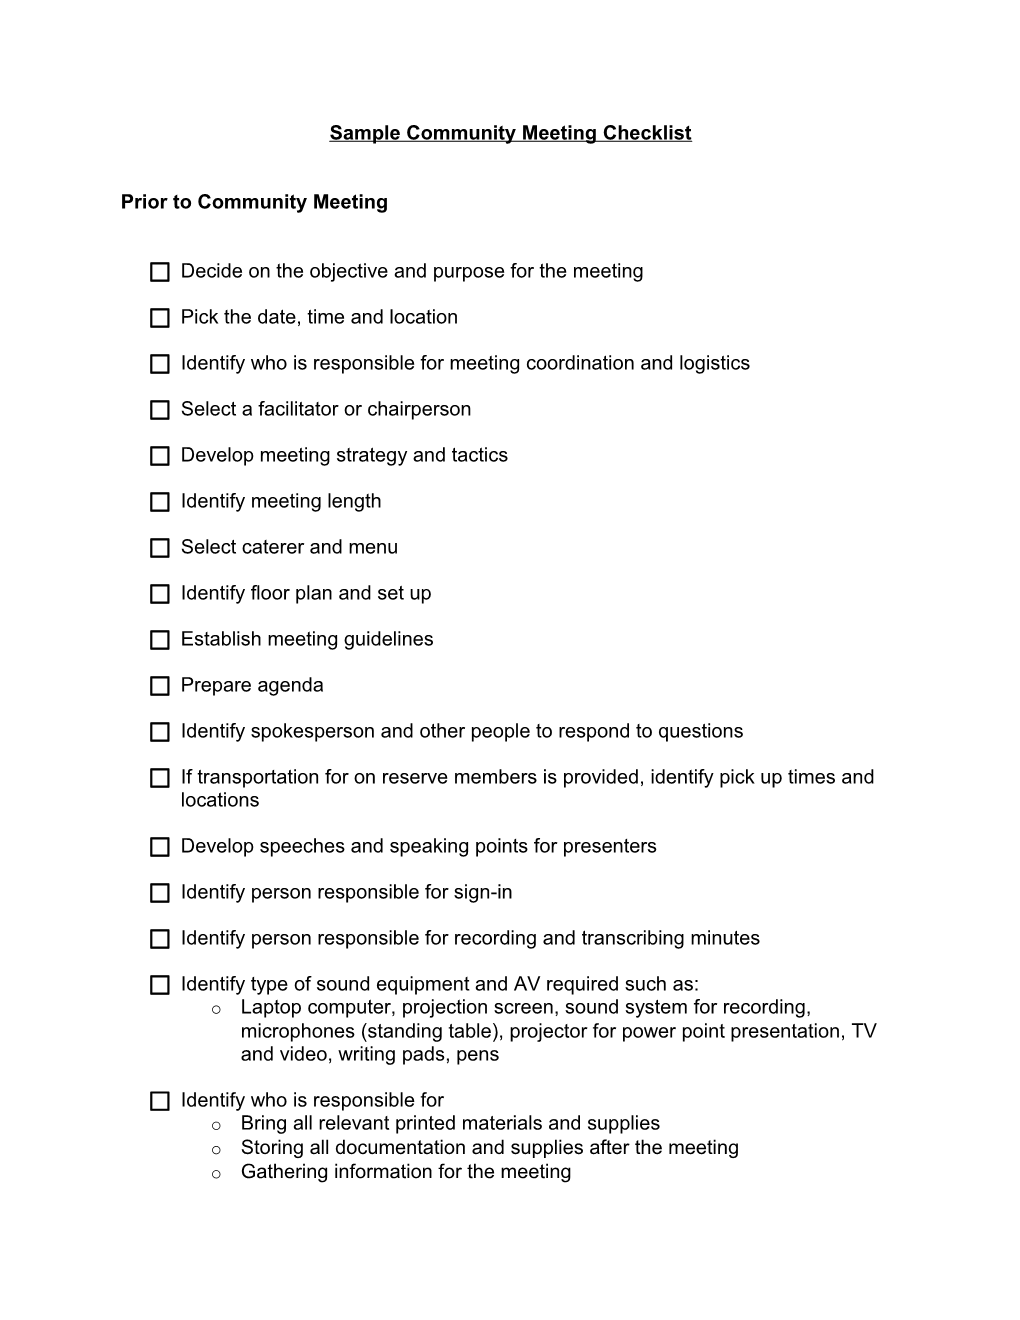 Sample Community Meeting Checklist